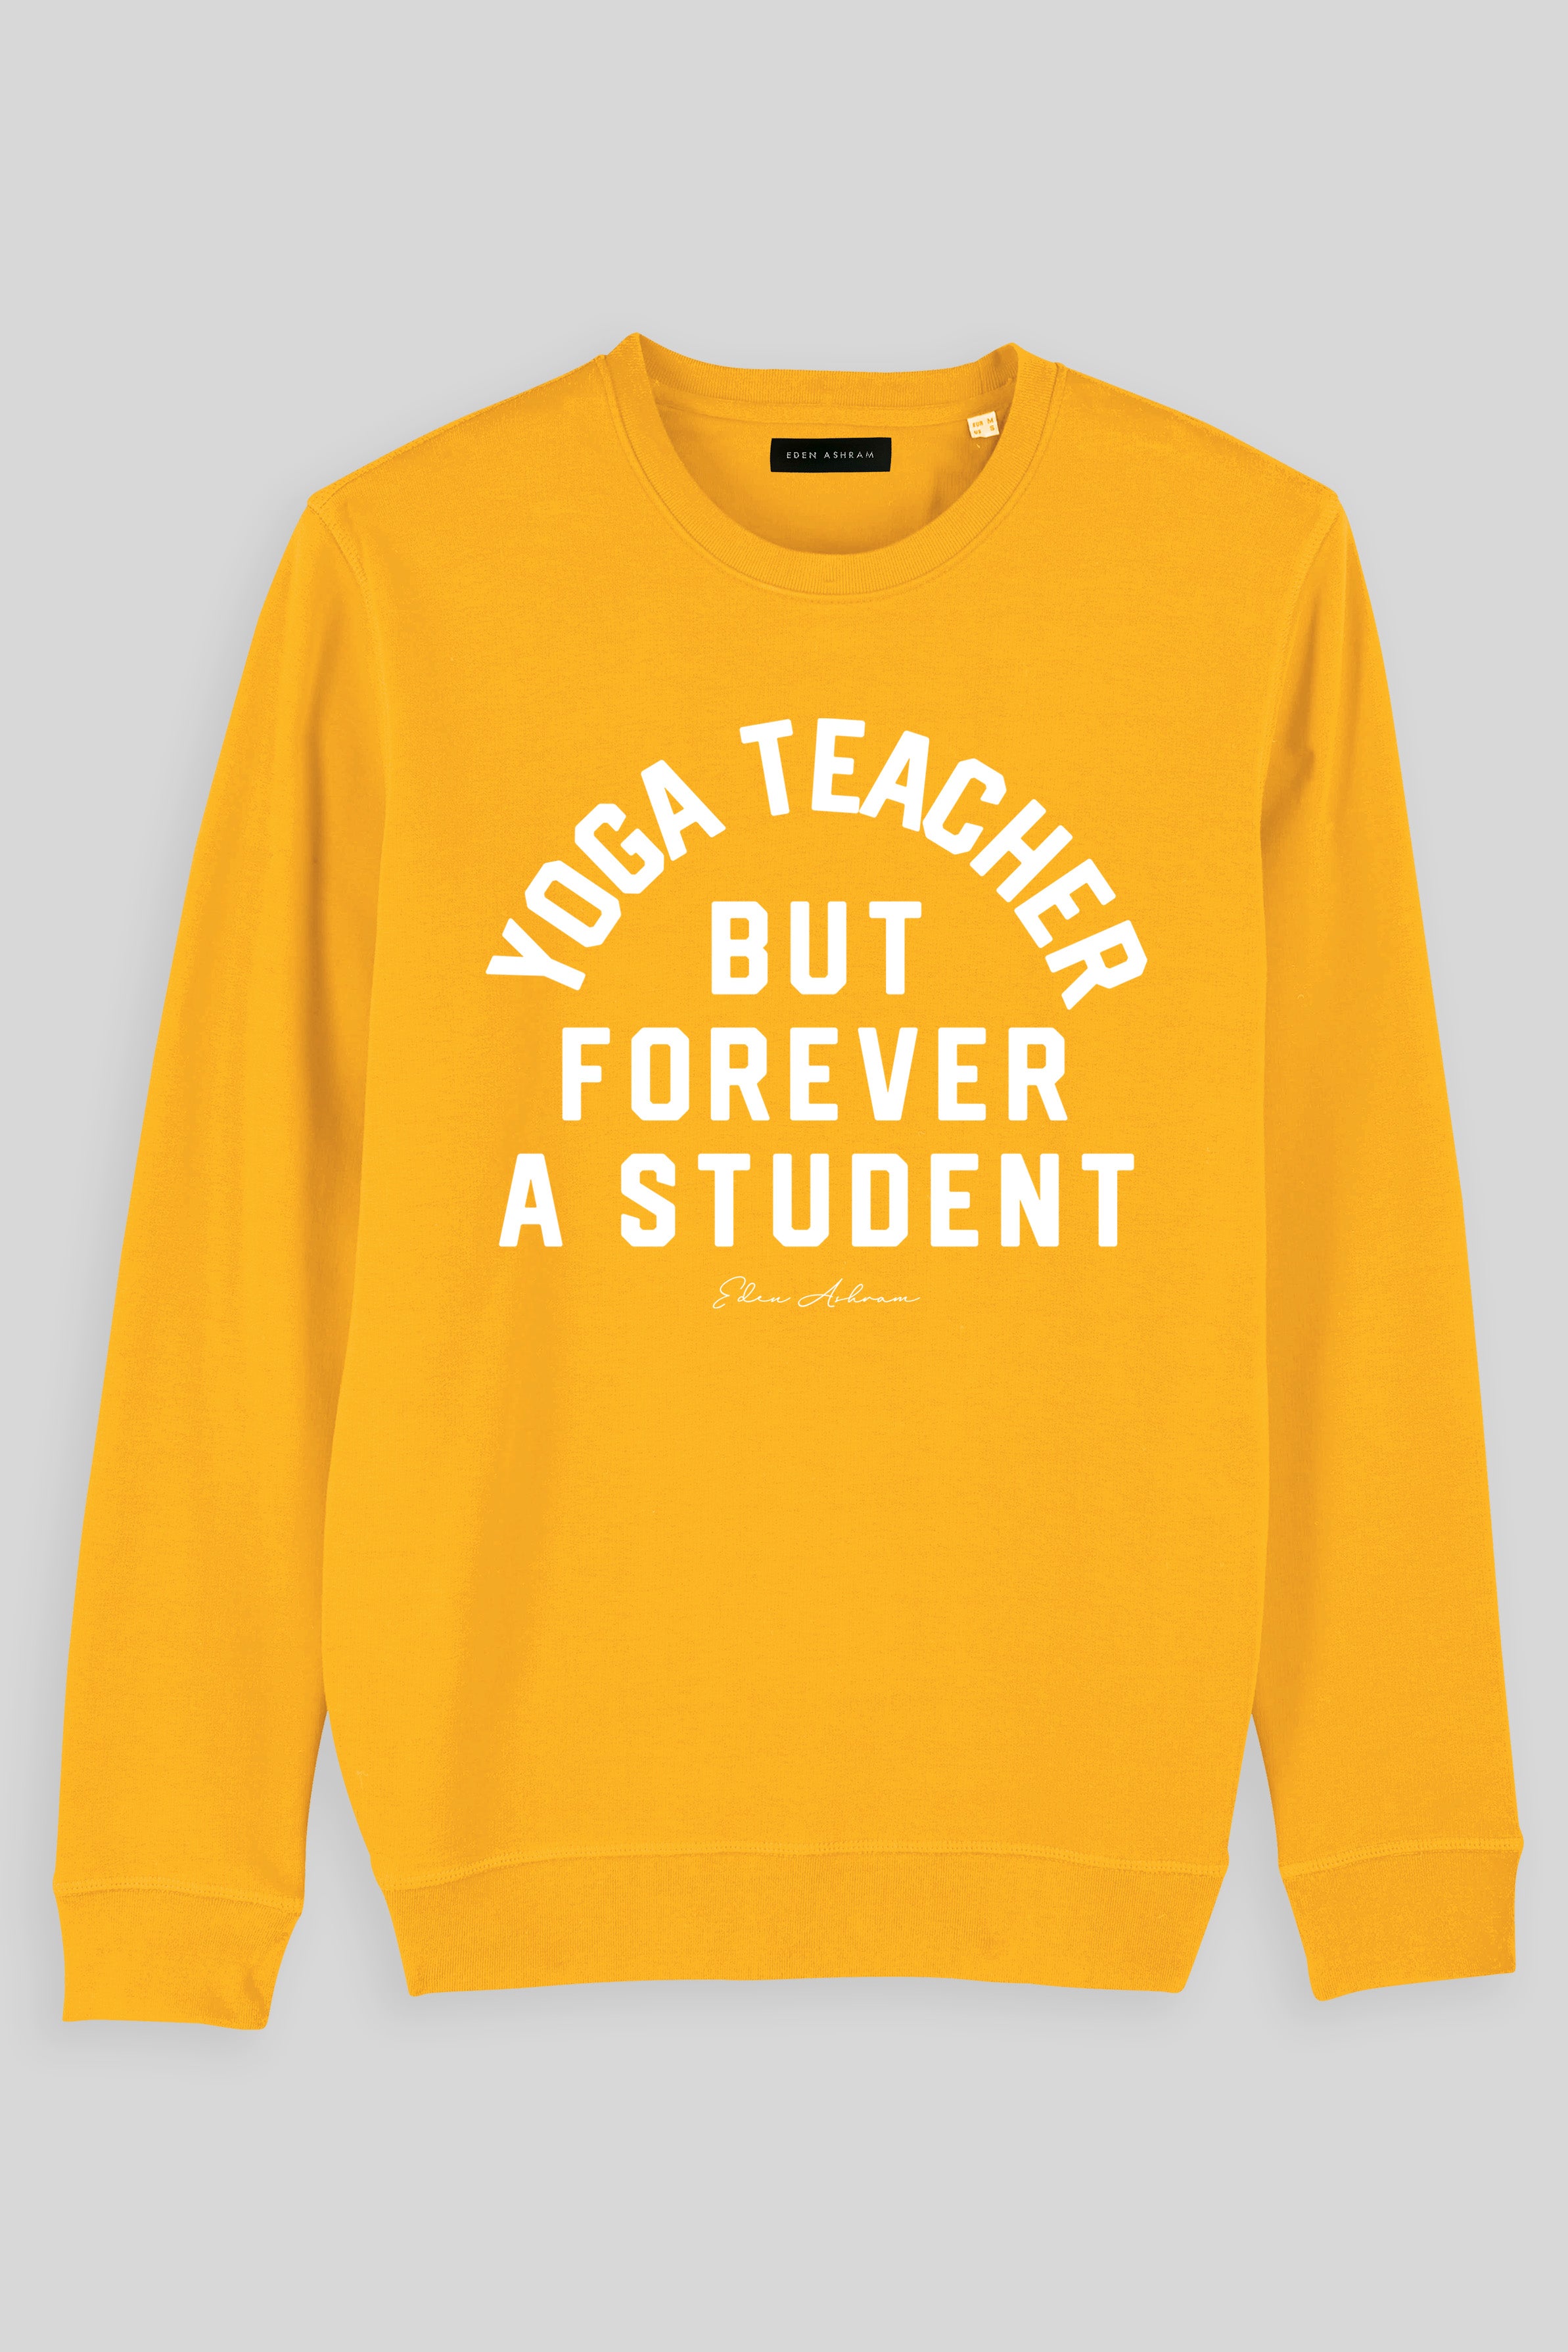 Eden Ashram Yoga Teacher But Forever A Student Premium Crew Neck Sweatshirt Spectra Yellow